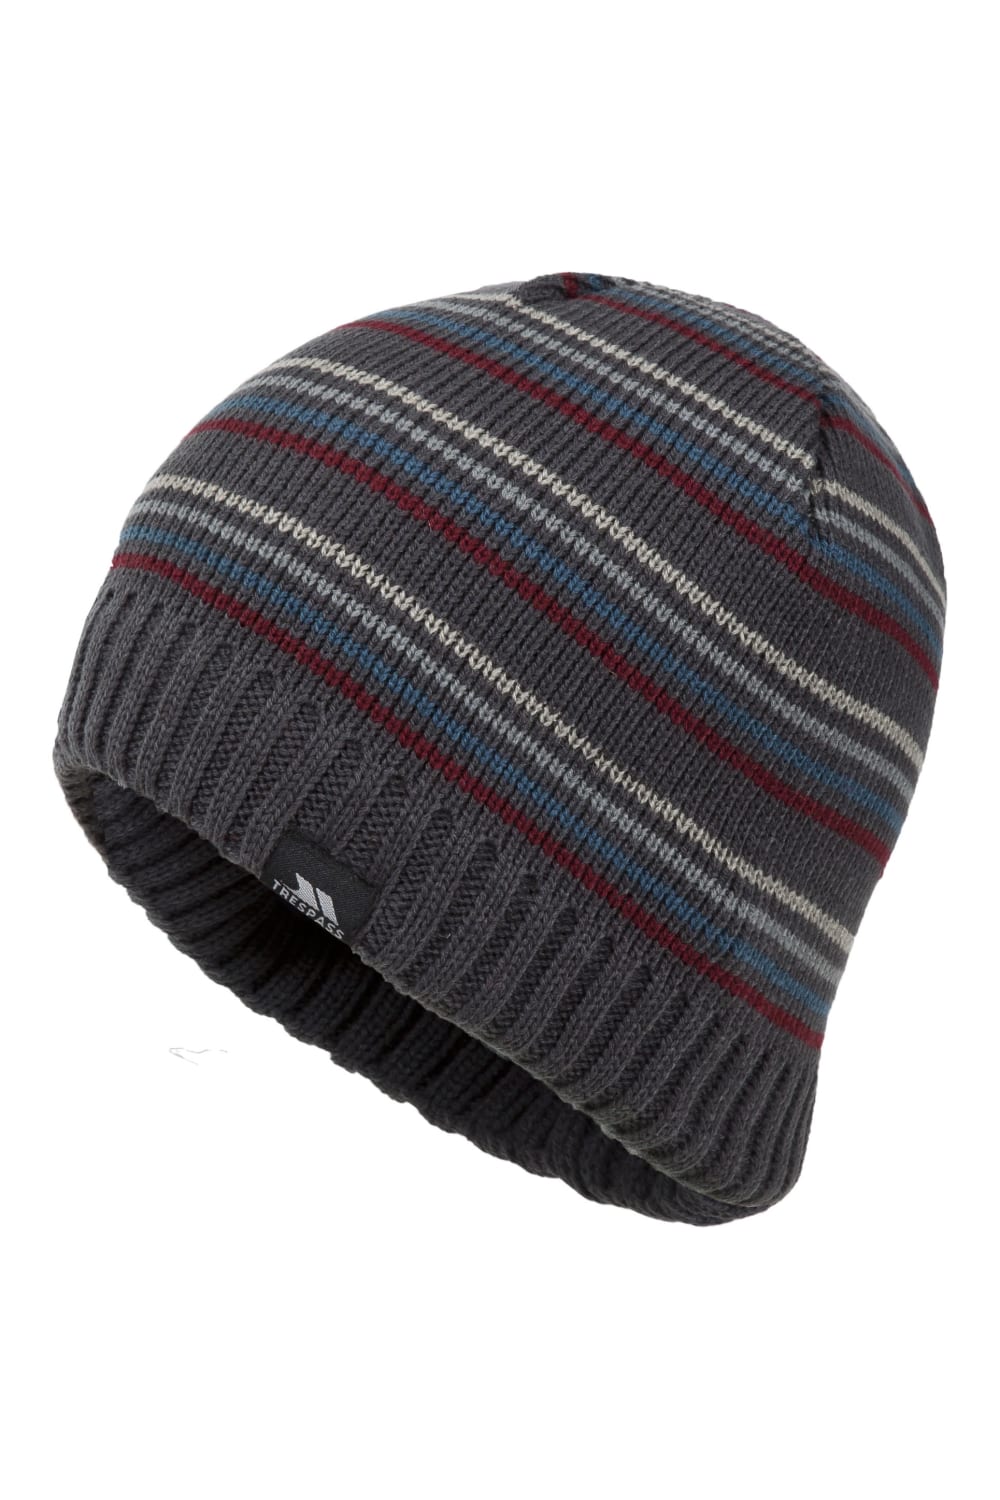 Trespass Mens Ray Knitted Winter Beanie Hat (Flint)